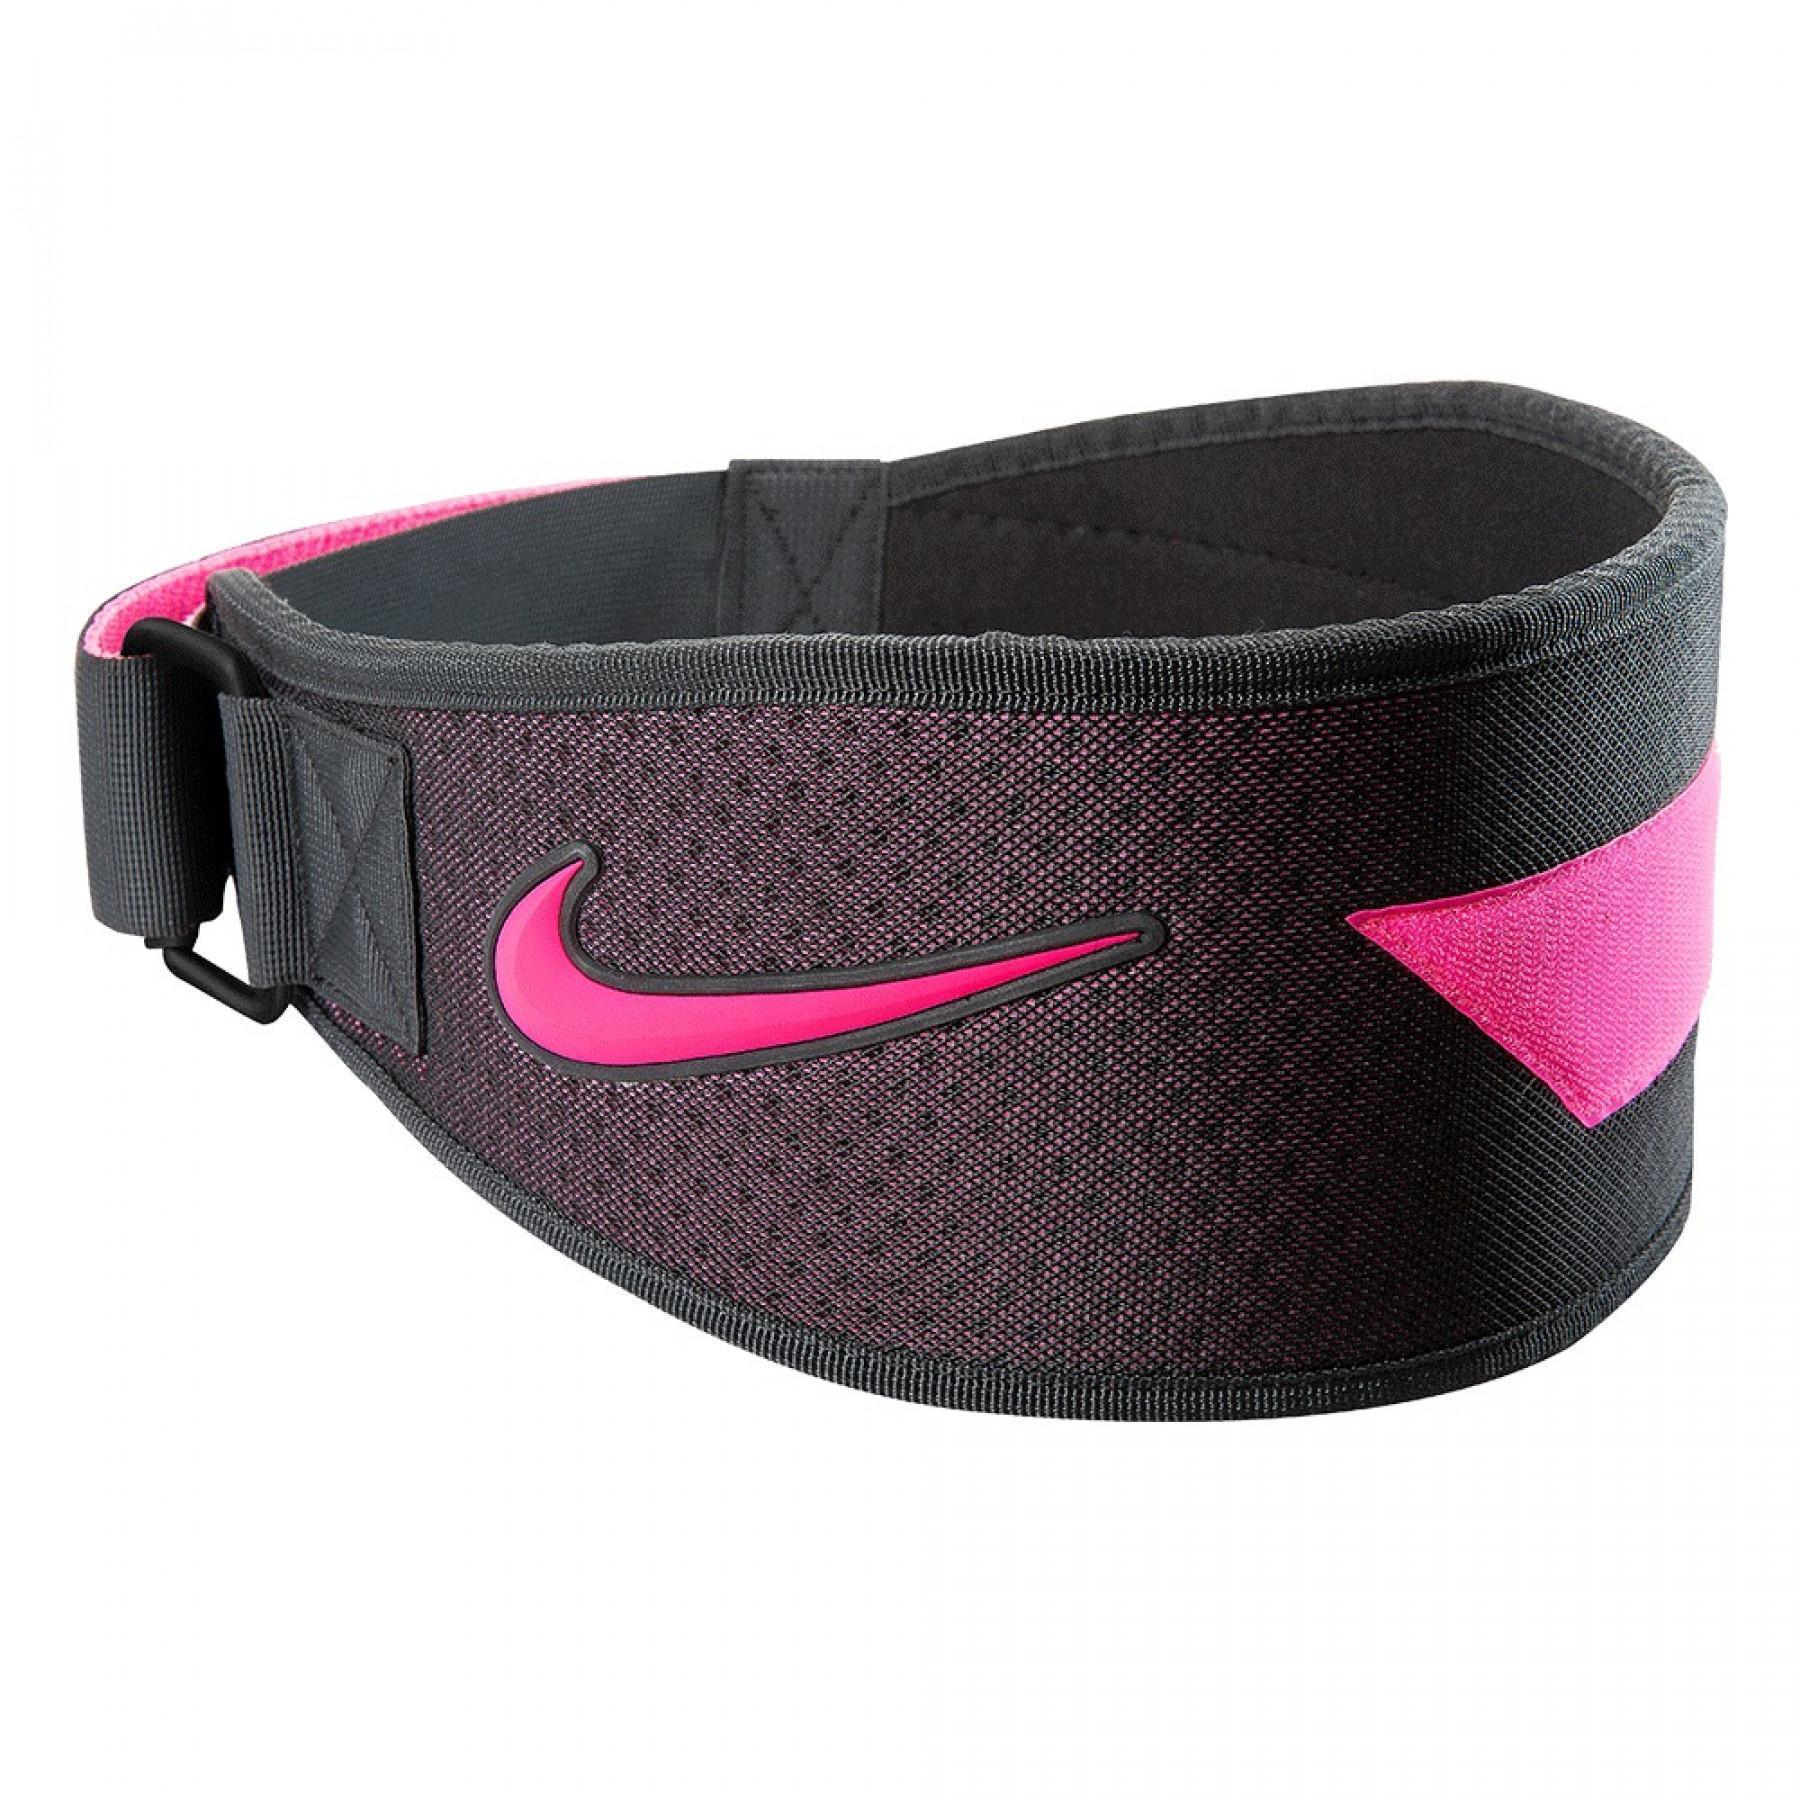 Lluvioso núcleo Jajaja Cinturón de entrenamiento para mujeres Nike intensity - Nike - Marcas - Club